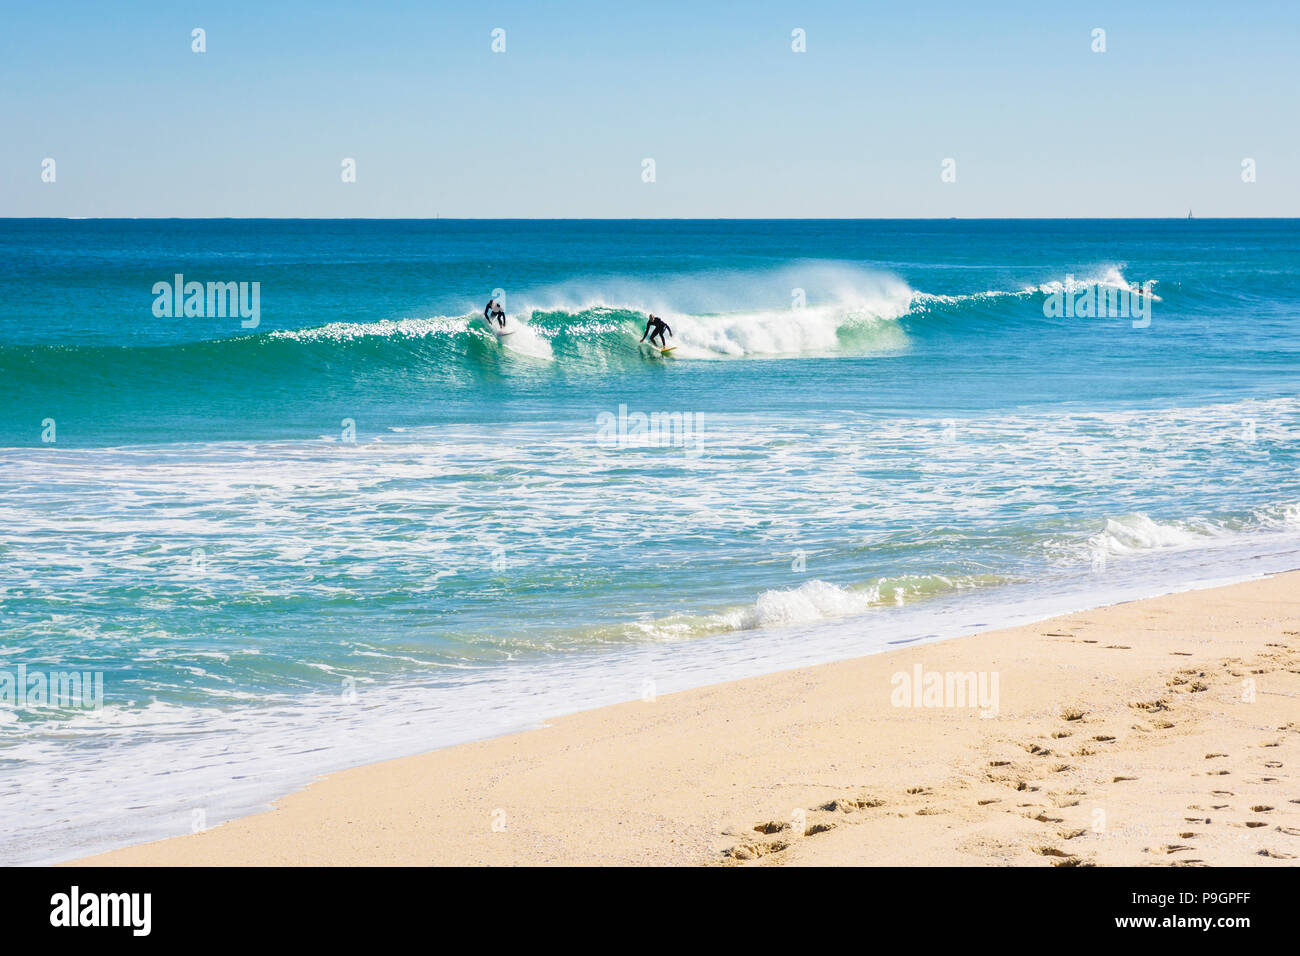 Surfers riding small waves at the beach break, Scarborough Beach, Perth, Western Australia Stock Photo